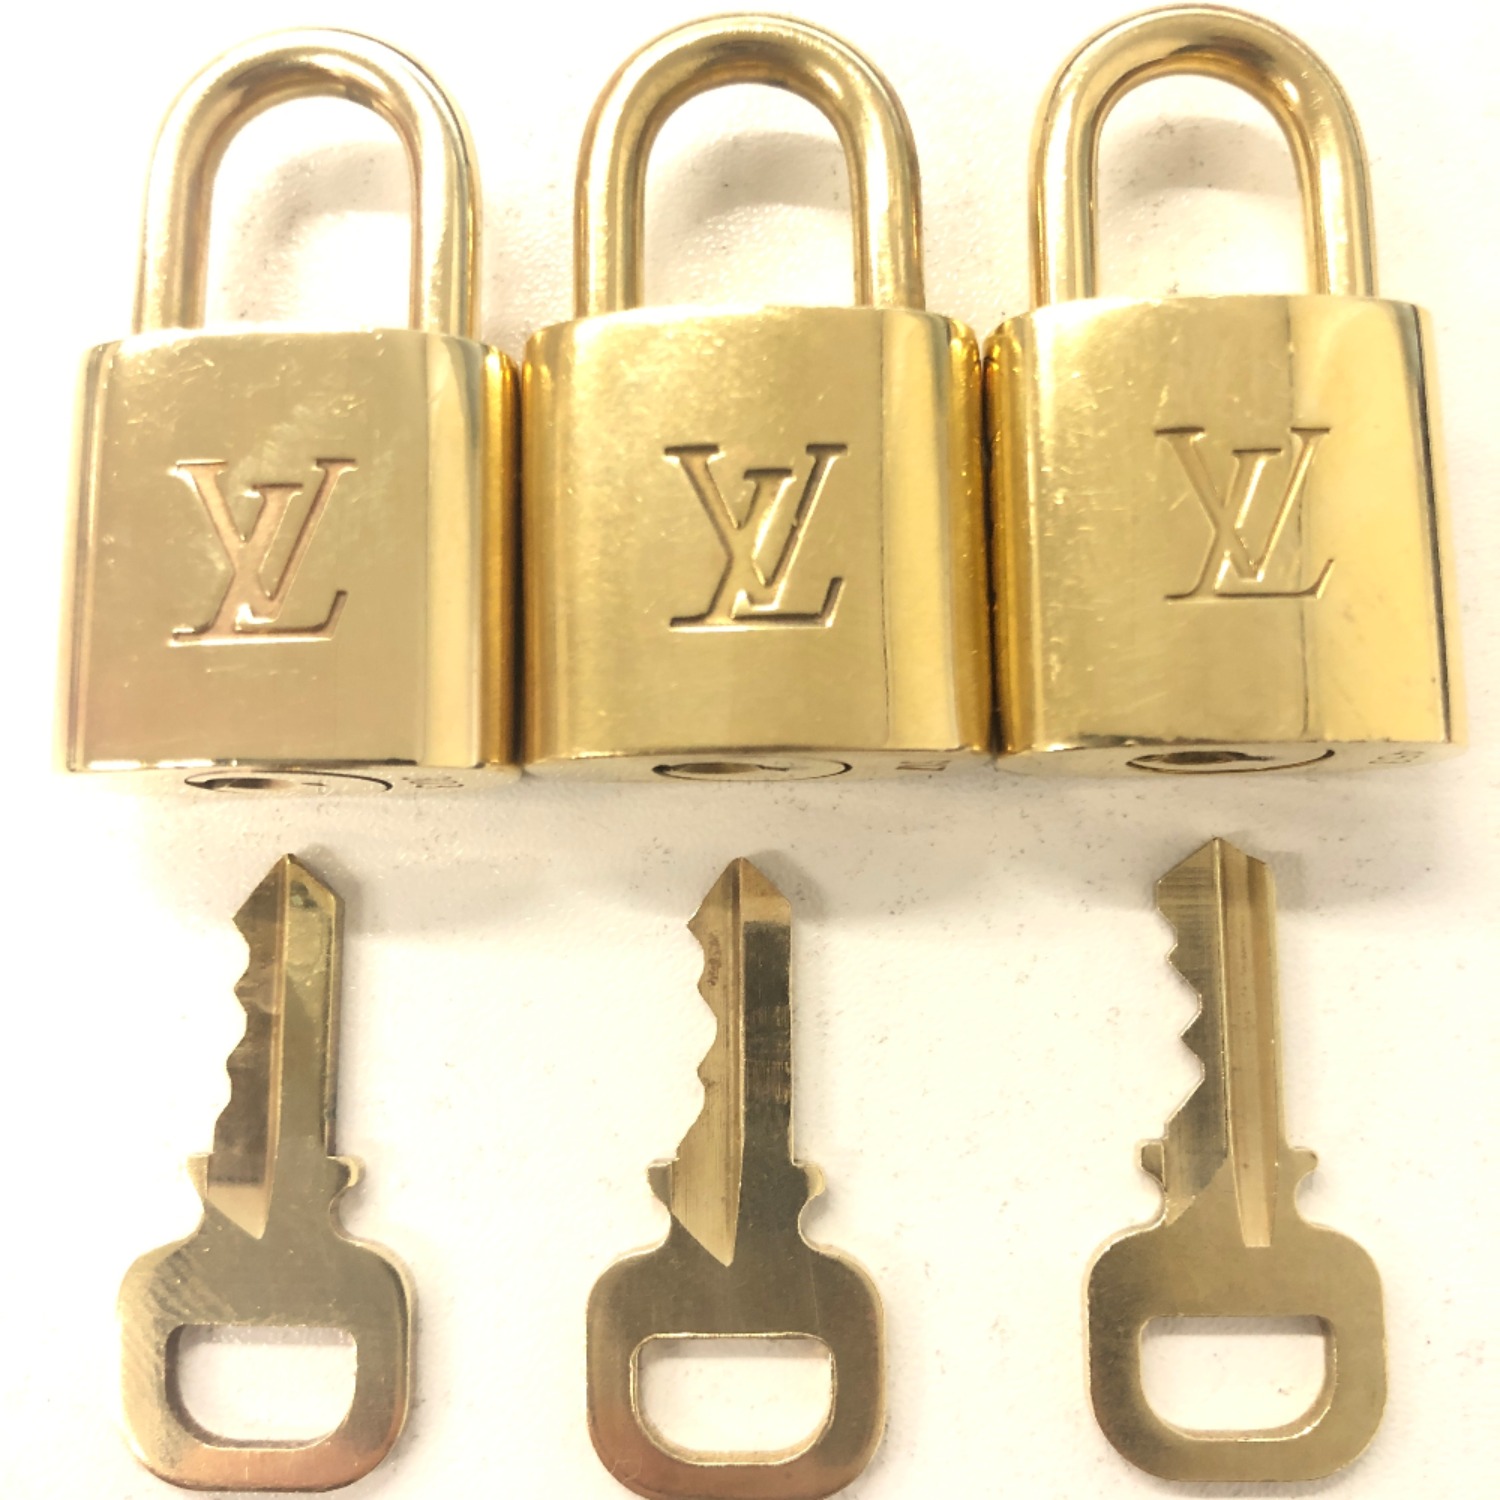 Louis Vuitton PadLock Lock & Key for Bags Brass Gold (Number random) 